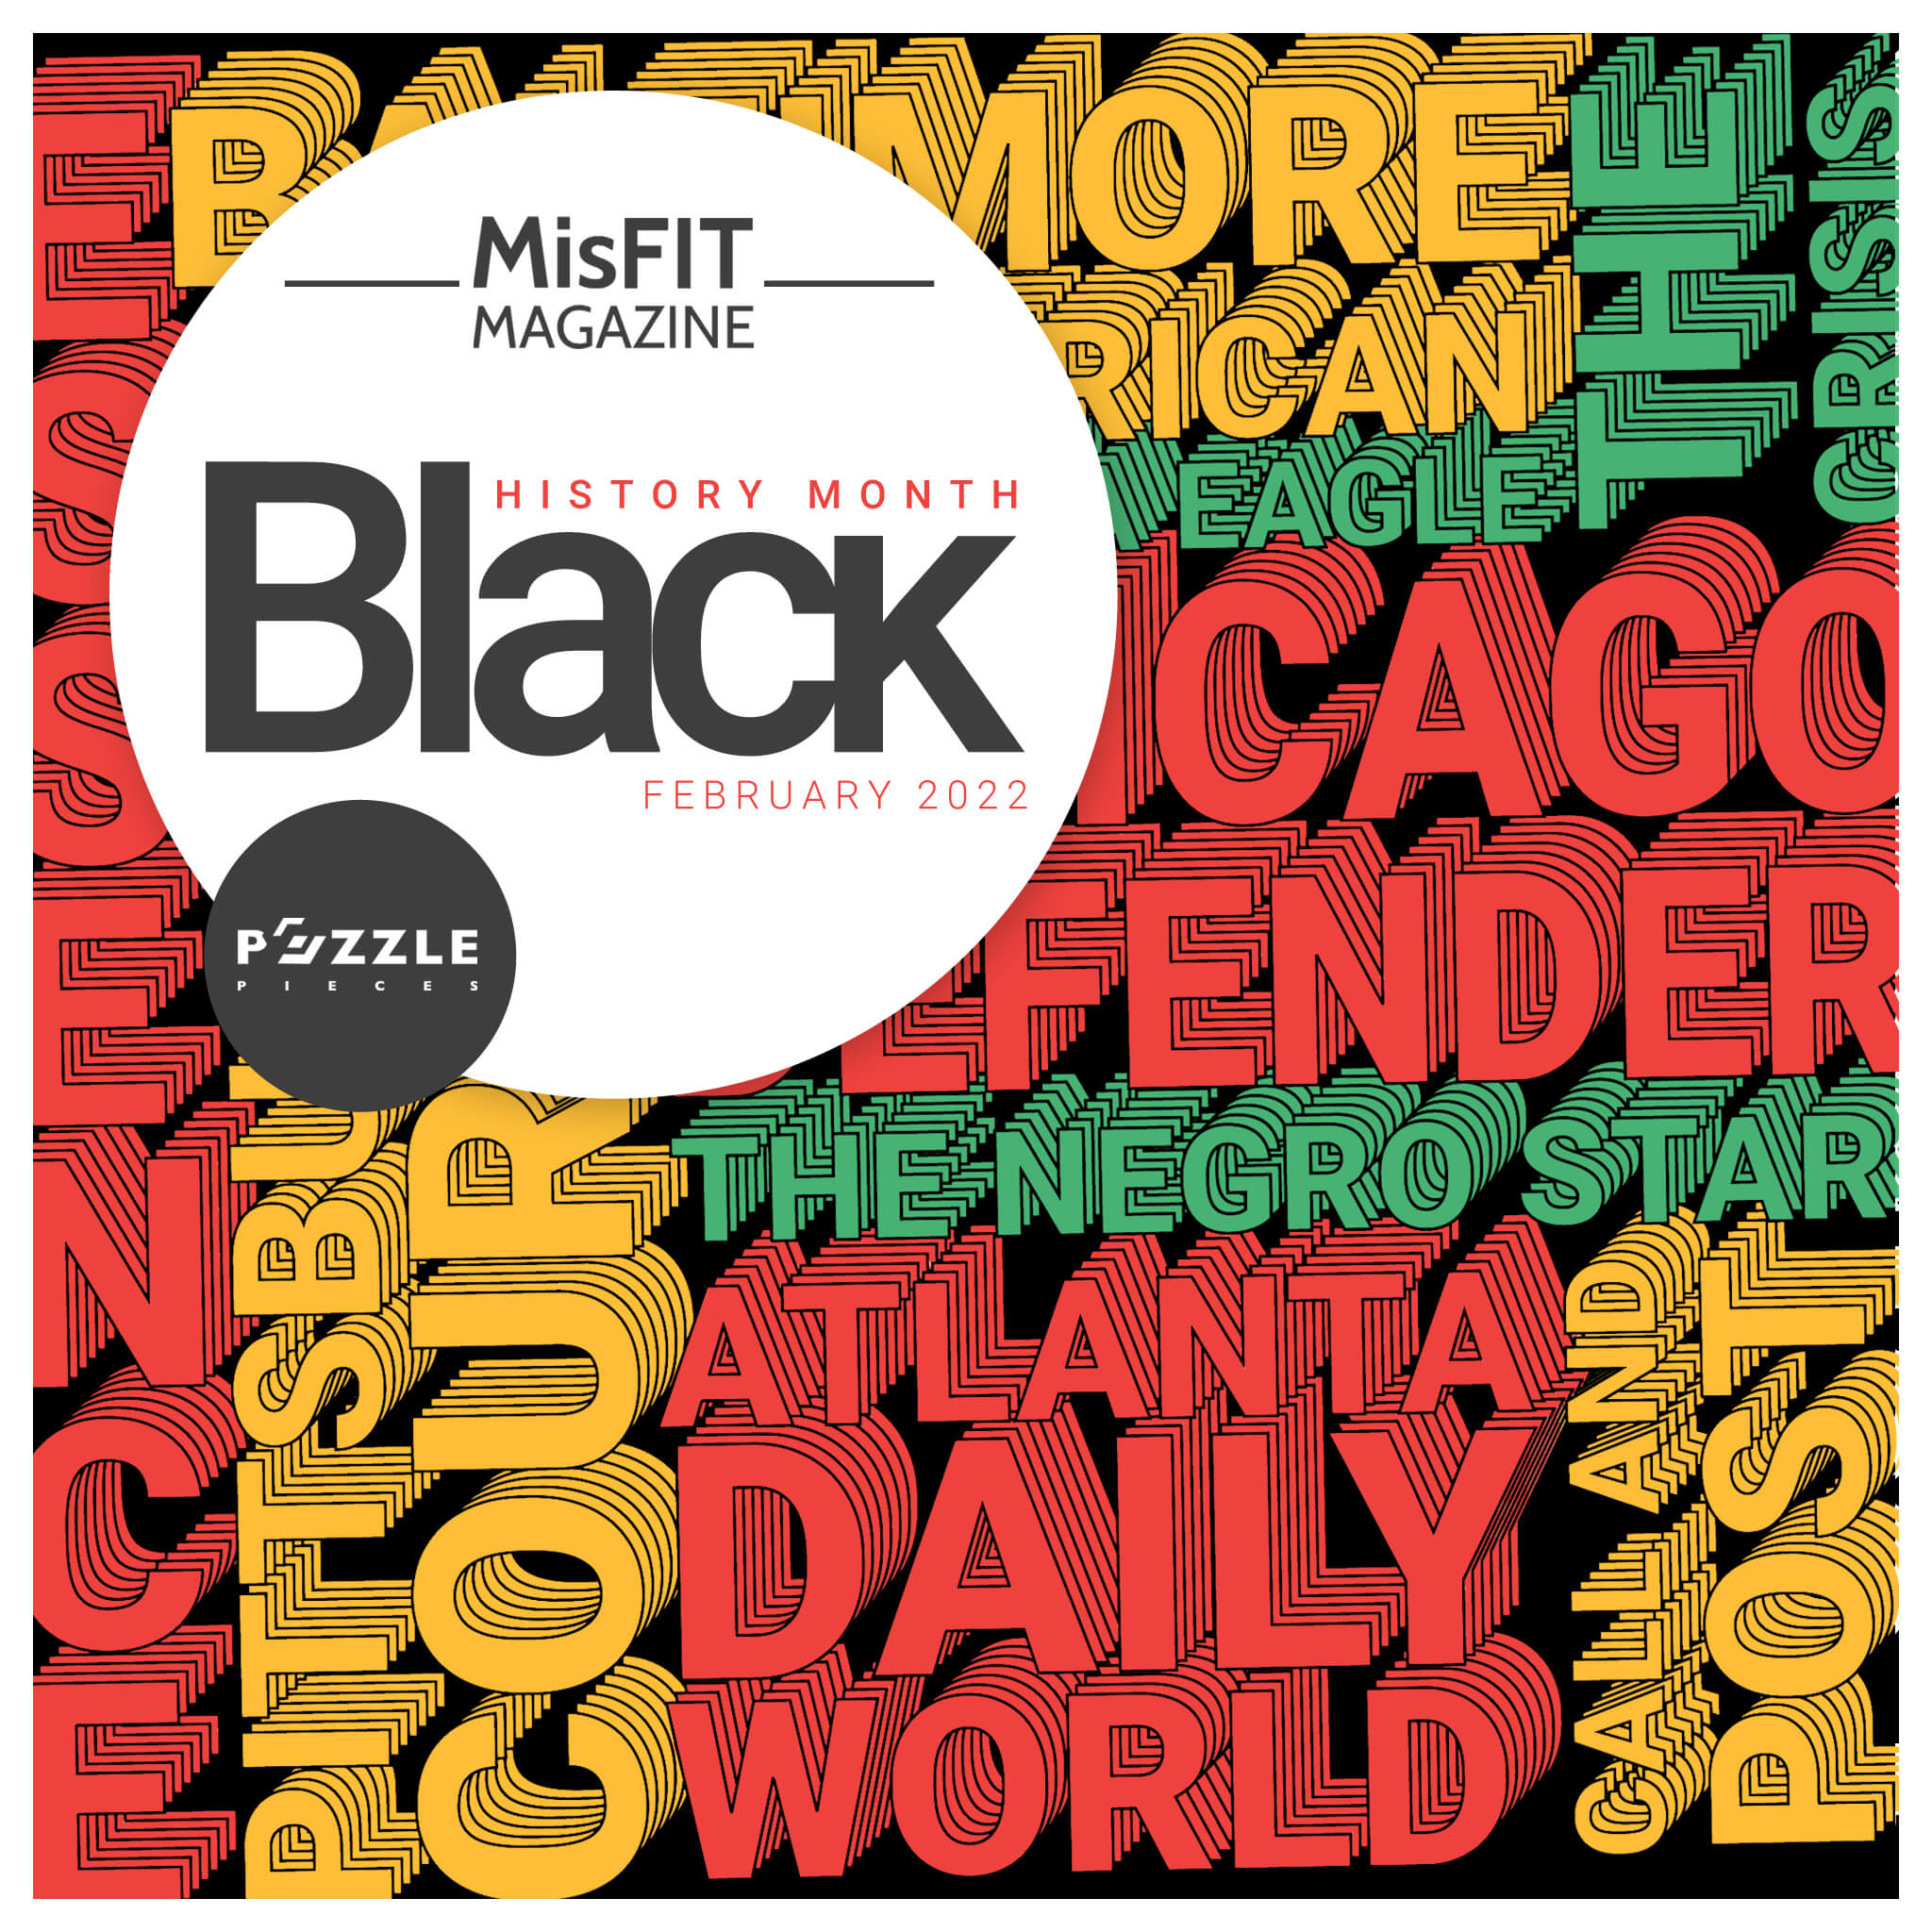 MisFIT Magazine February 2022 Black Cover